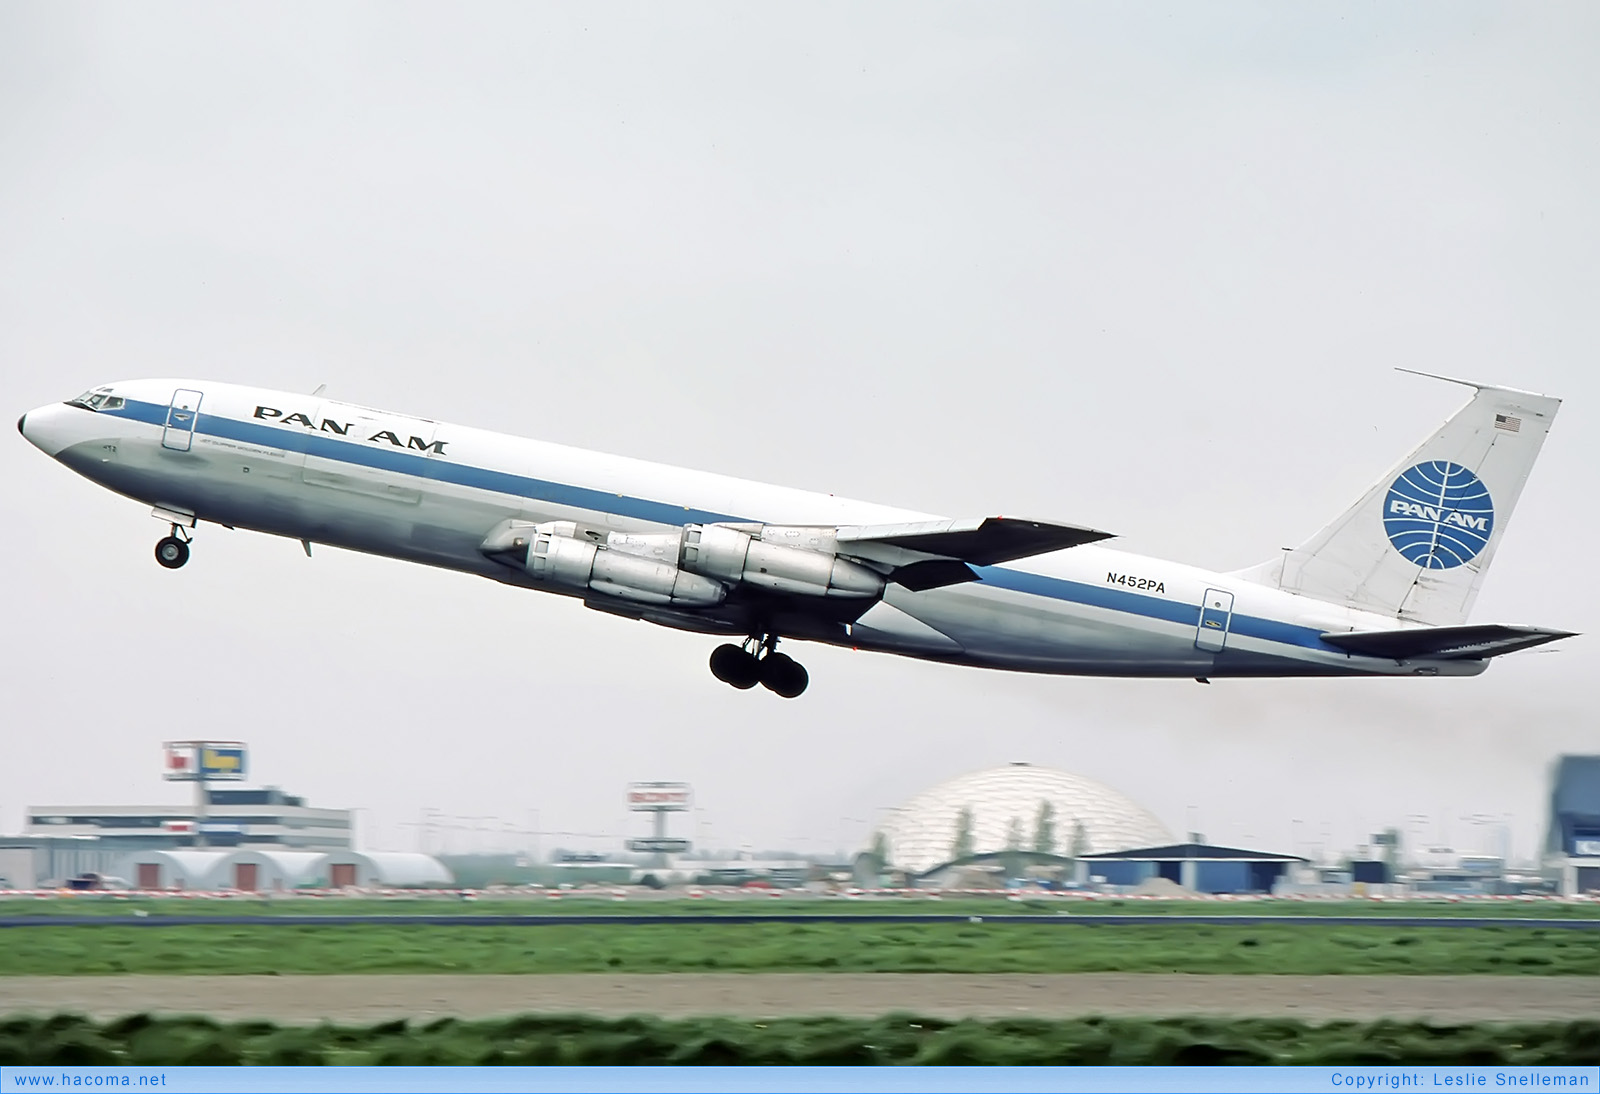 Photo of N452PA - Pan Am Clipper Golden Fleece - Amsterdam Airport Schiphol - Apr 30, 1977